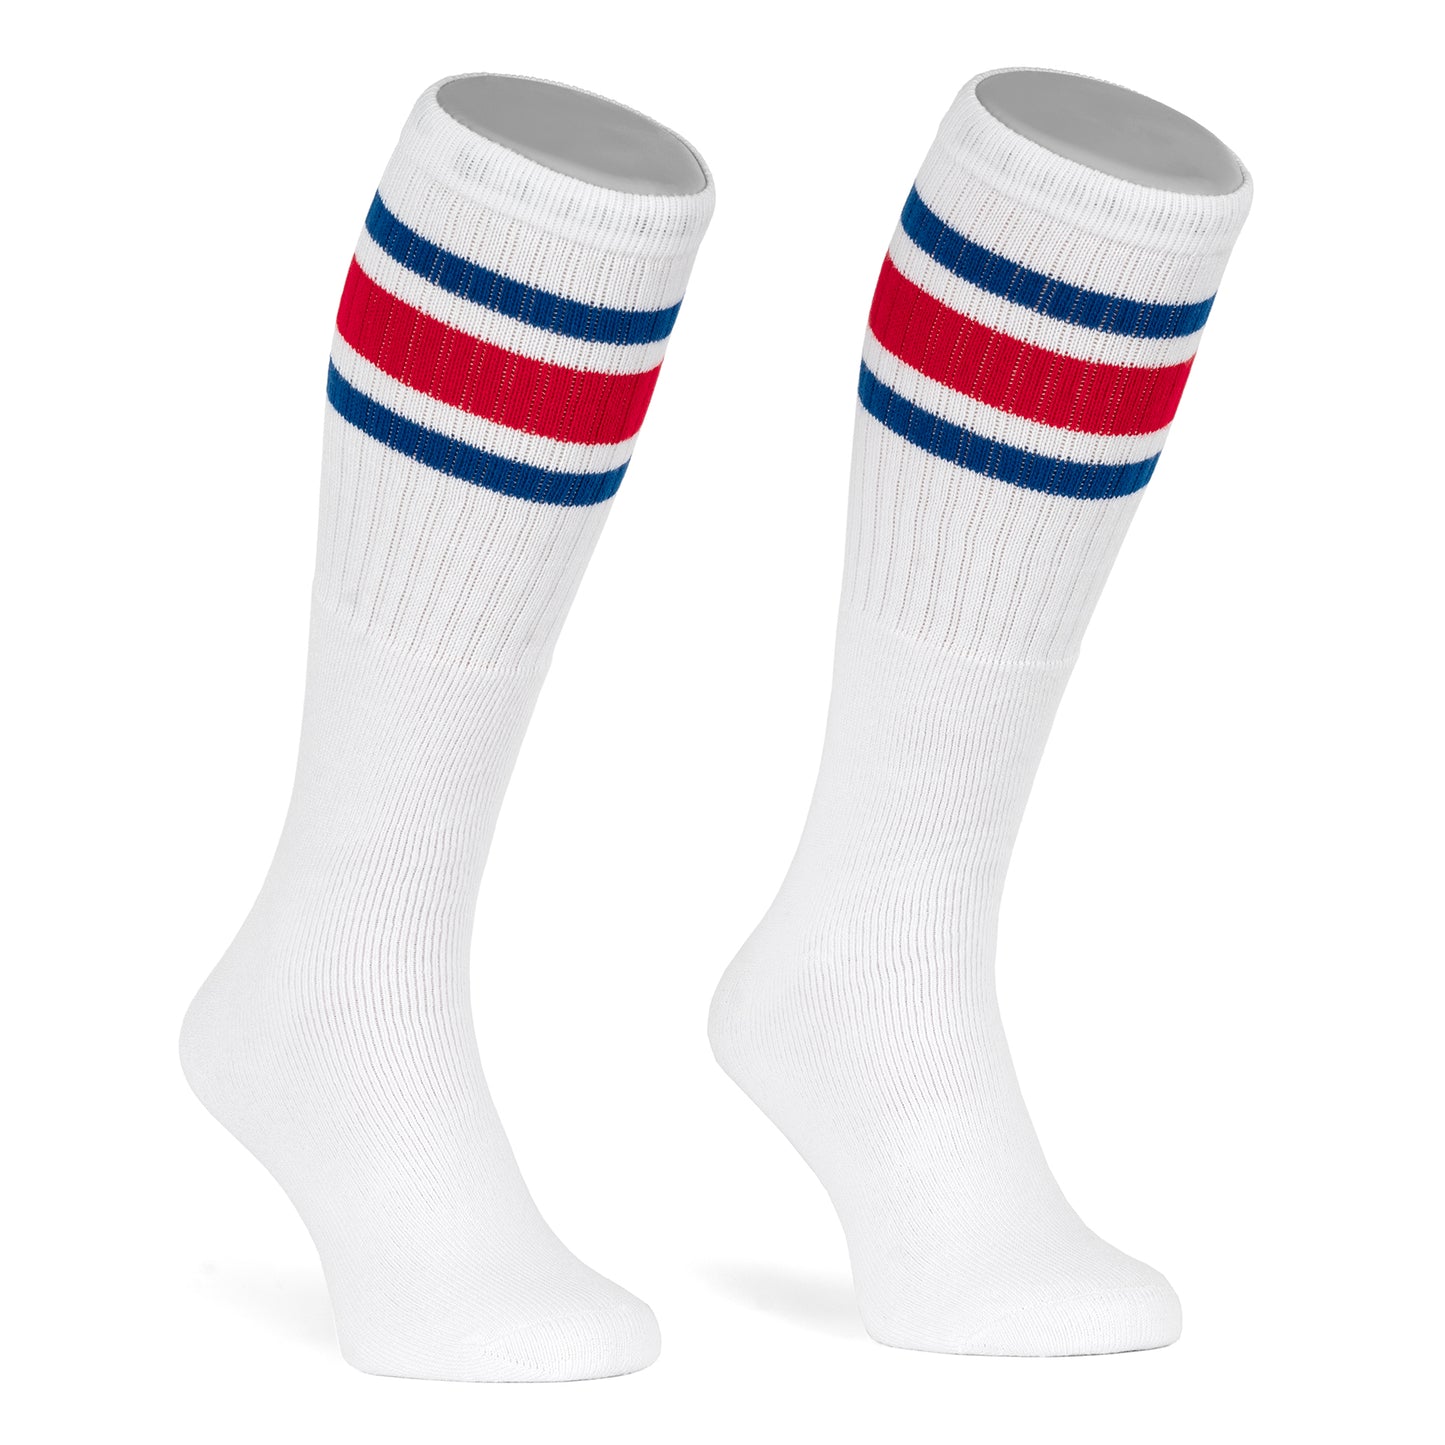 Skatersocks 25 Inch Knee High Tube Socks White / Royal blue and red striped - Phoenix 212 Clothing